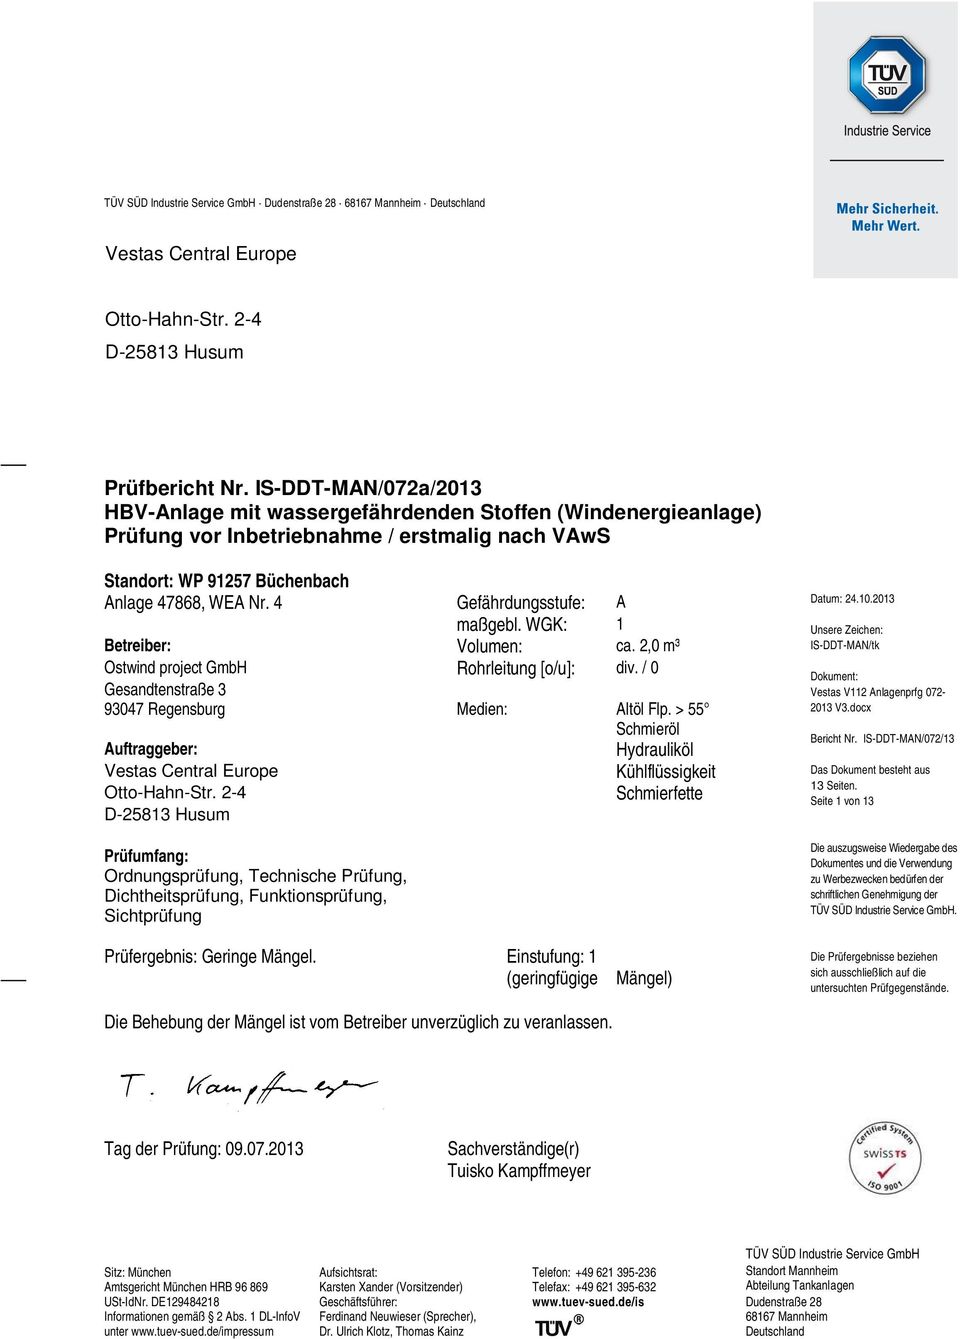 4 Gefährdungsstufe: A maßgebl. WGK: 1 Betreiber: Volumen: ca. 2,0 m³ Ostwind project GmbH Rohrleitung [o/u]: div. / 0 Gesandtenstraße 3 93047 Regensburg Medien: Altöl Flp.